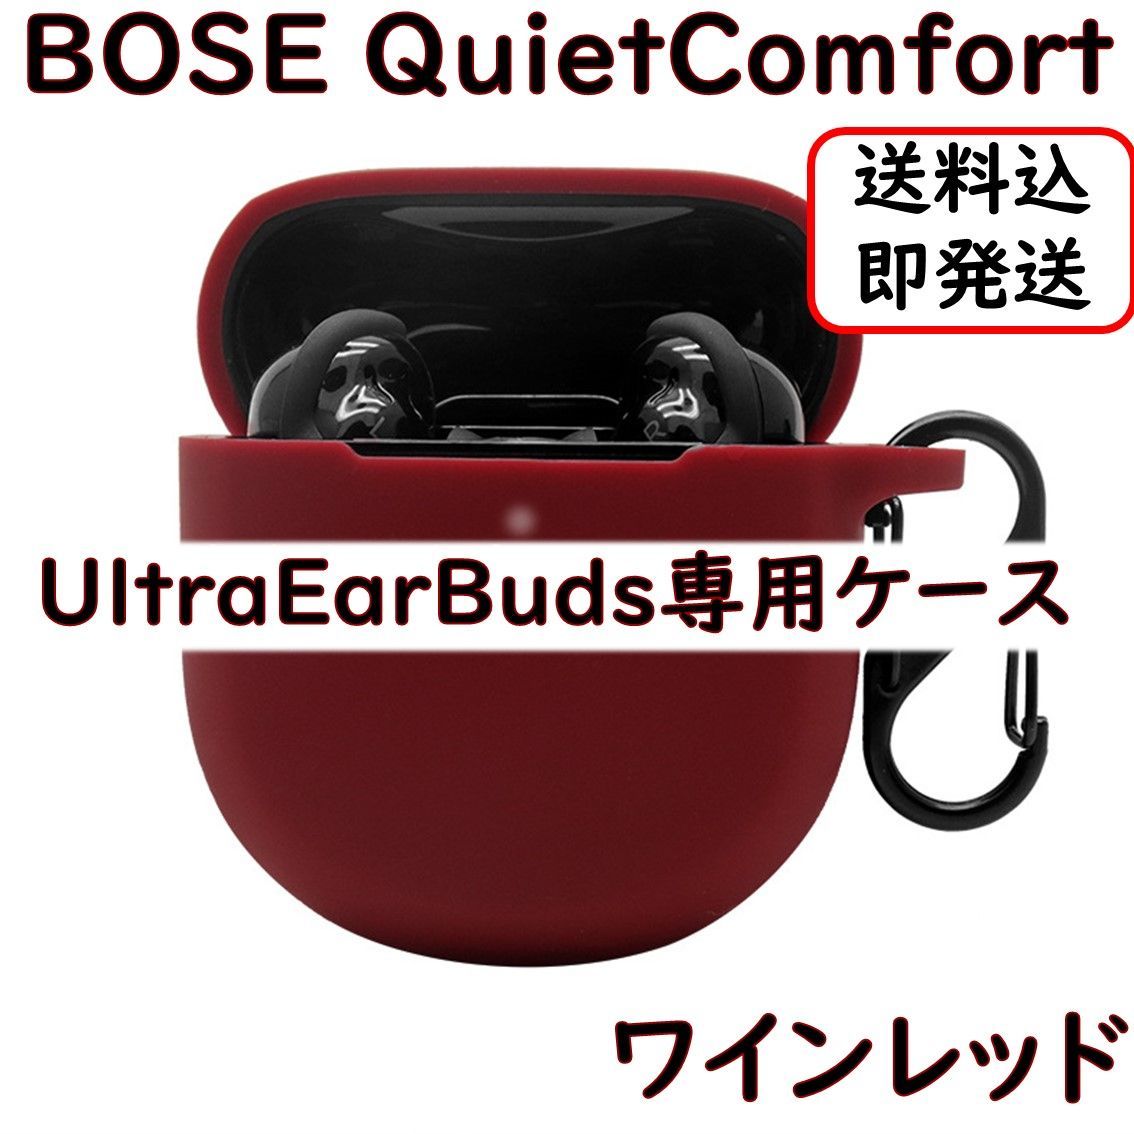 BOSE QuietComfort Ultra EarBuds シリコンケース ボーズフル